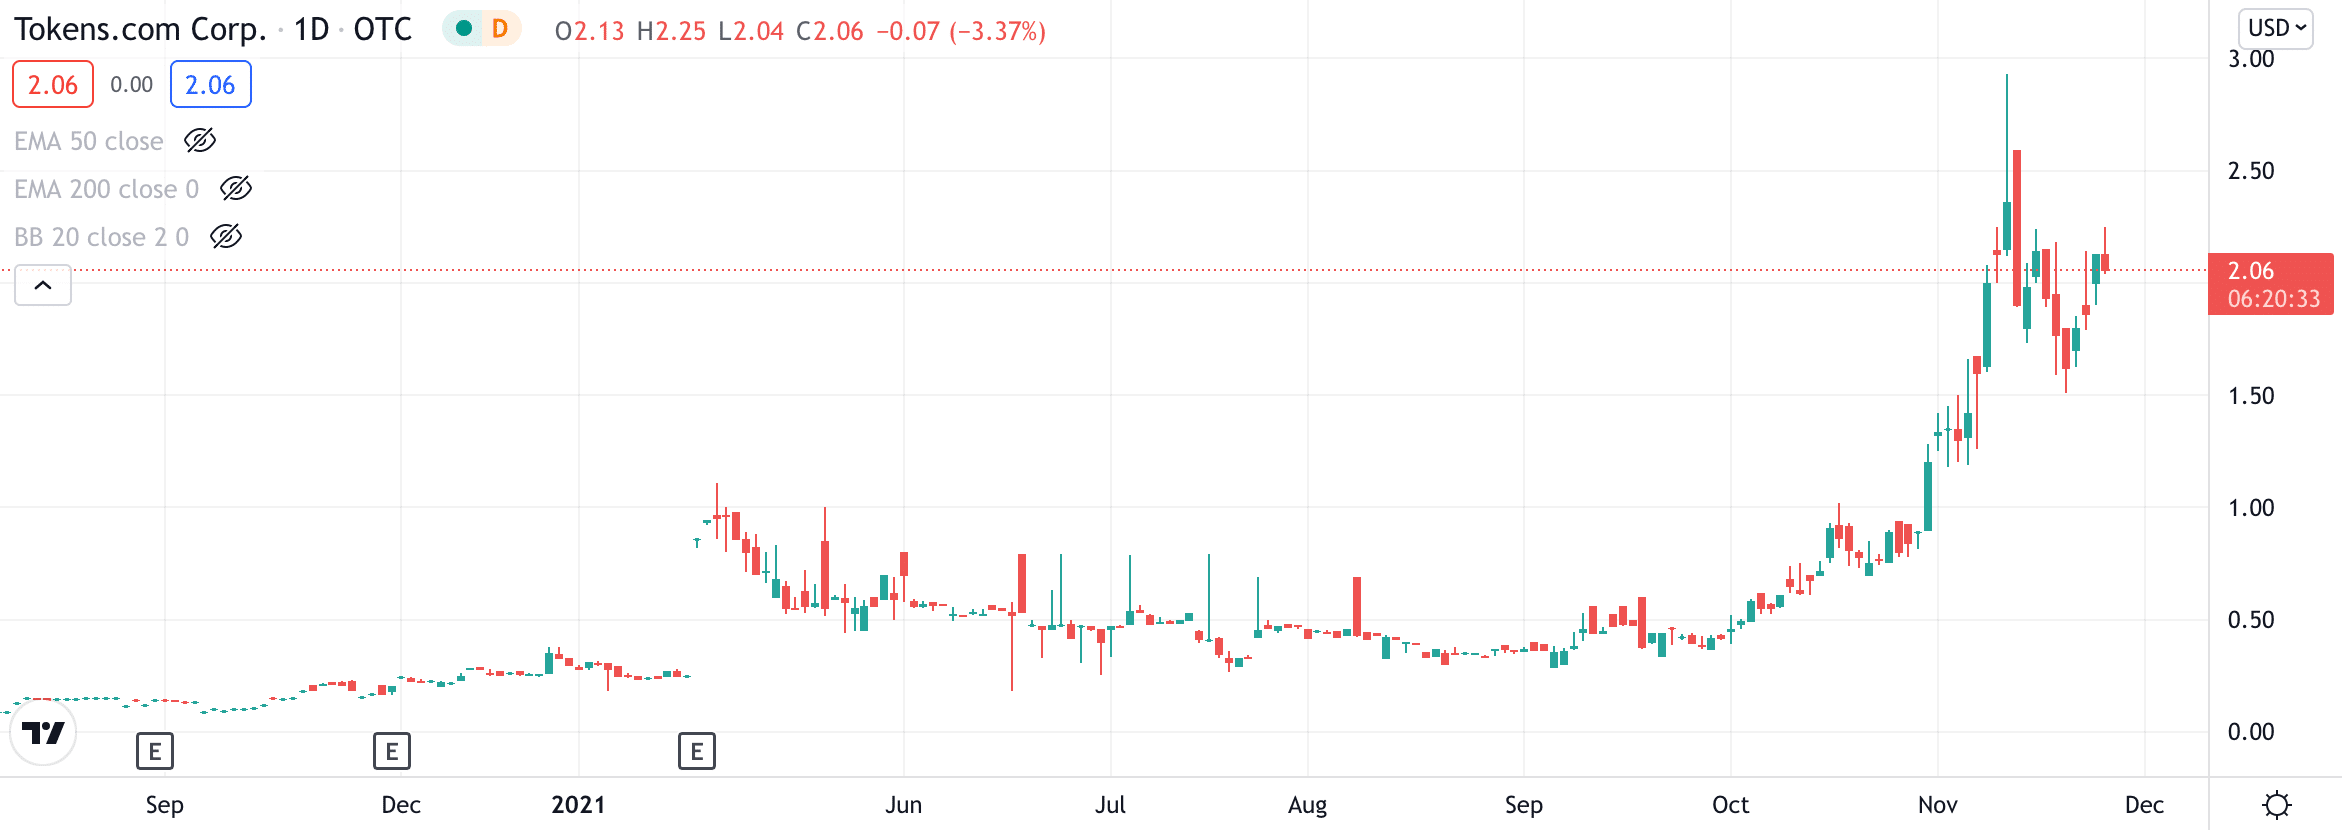 tokens.com price chart